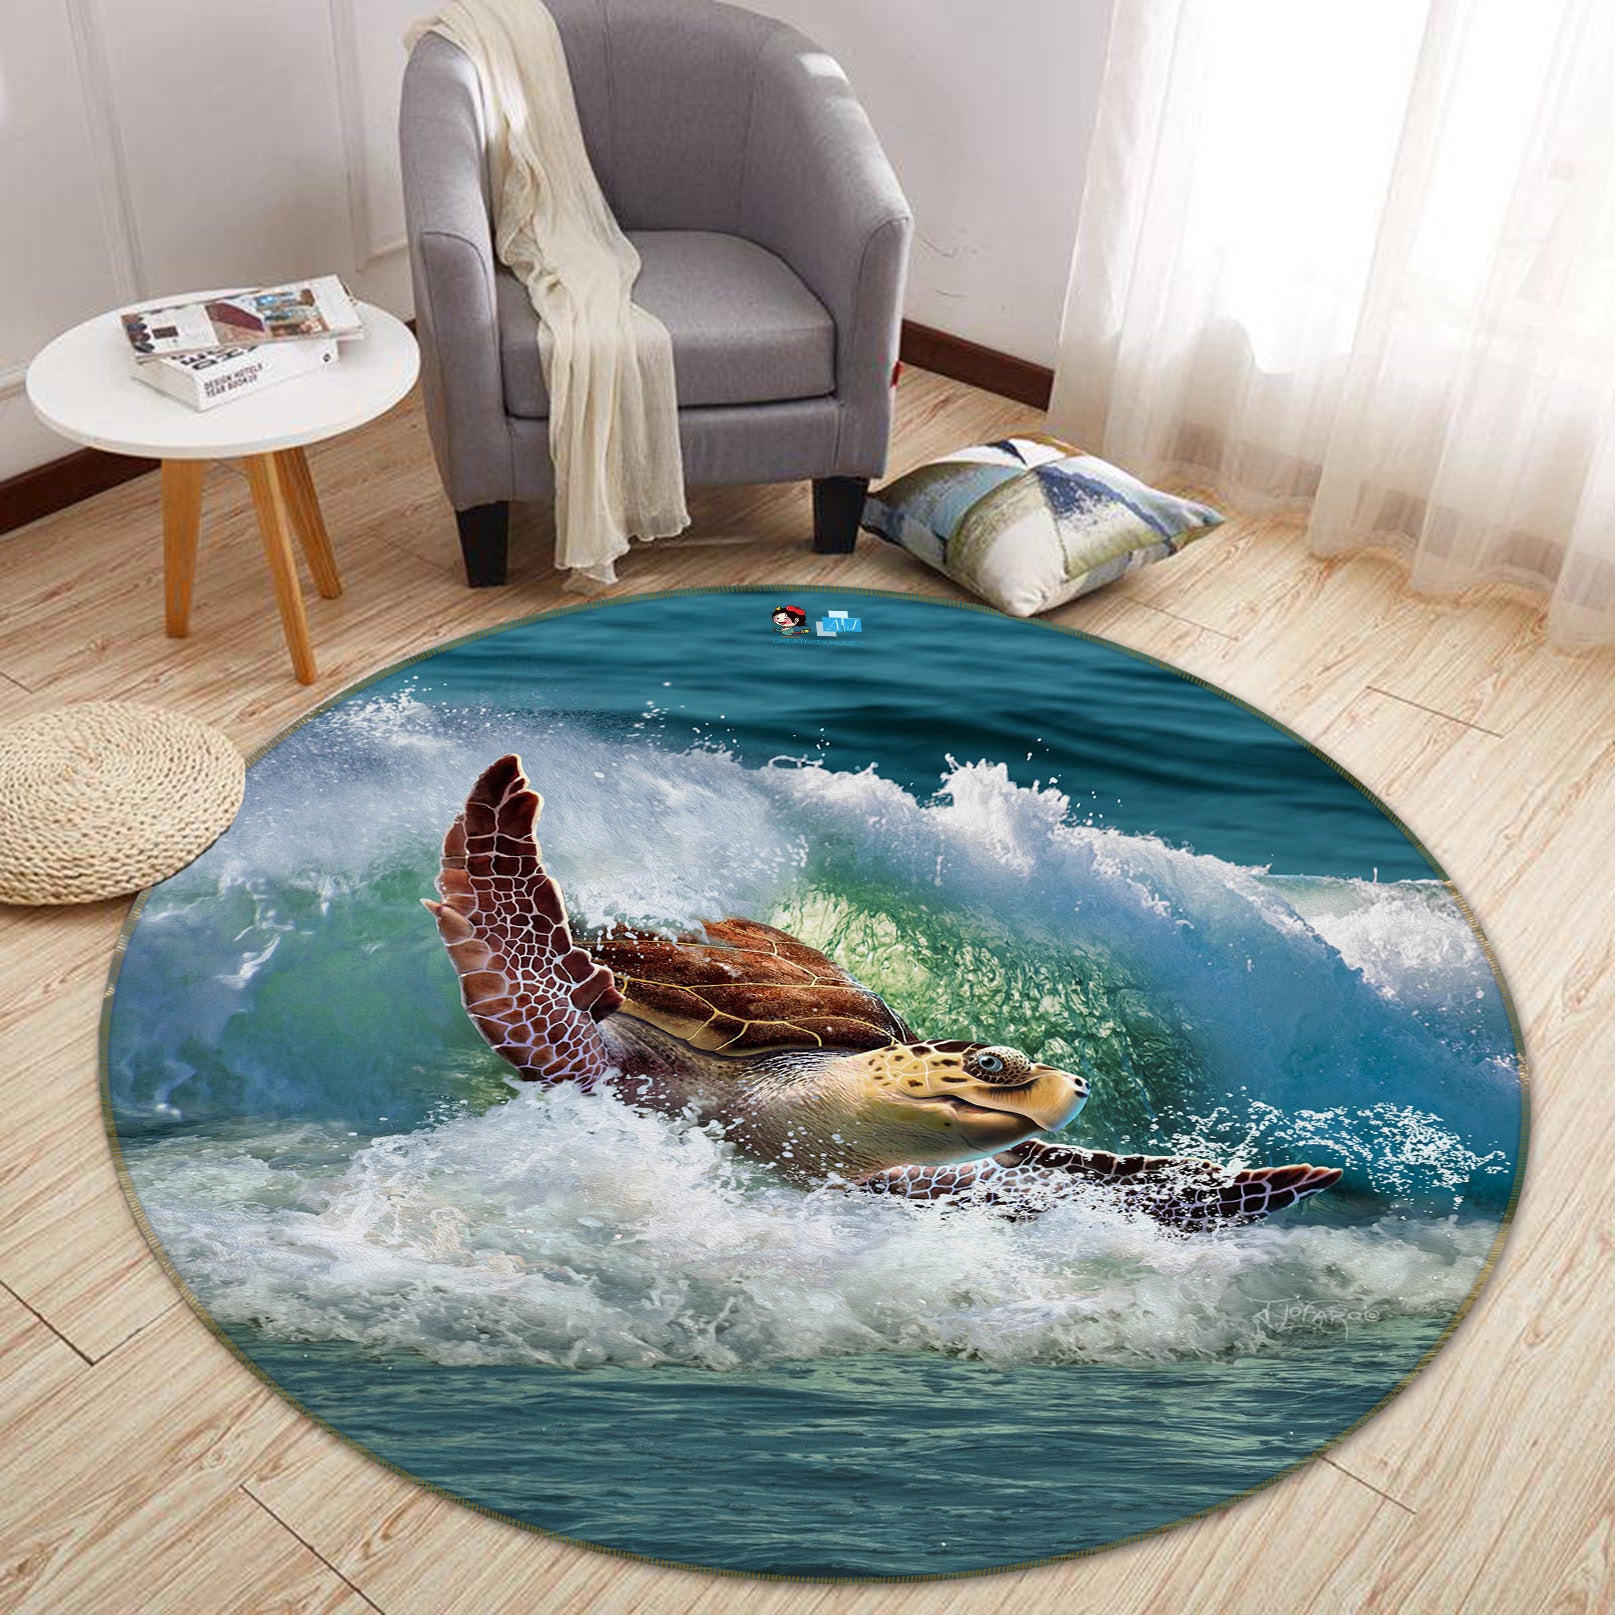 3D Waves Sea Turtle 83142 Jerry LoFaro Rug Round Non Slip Rug Mat